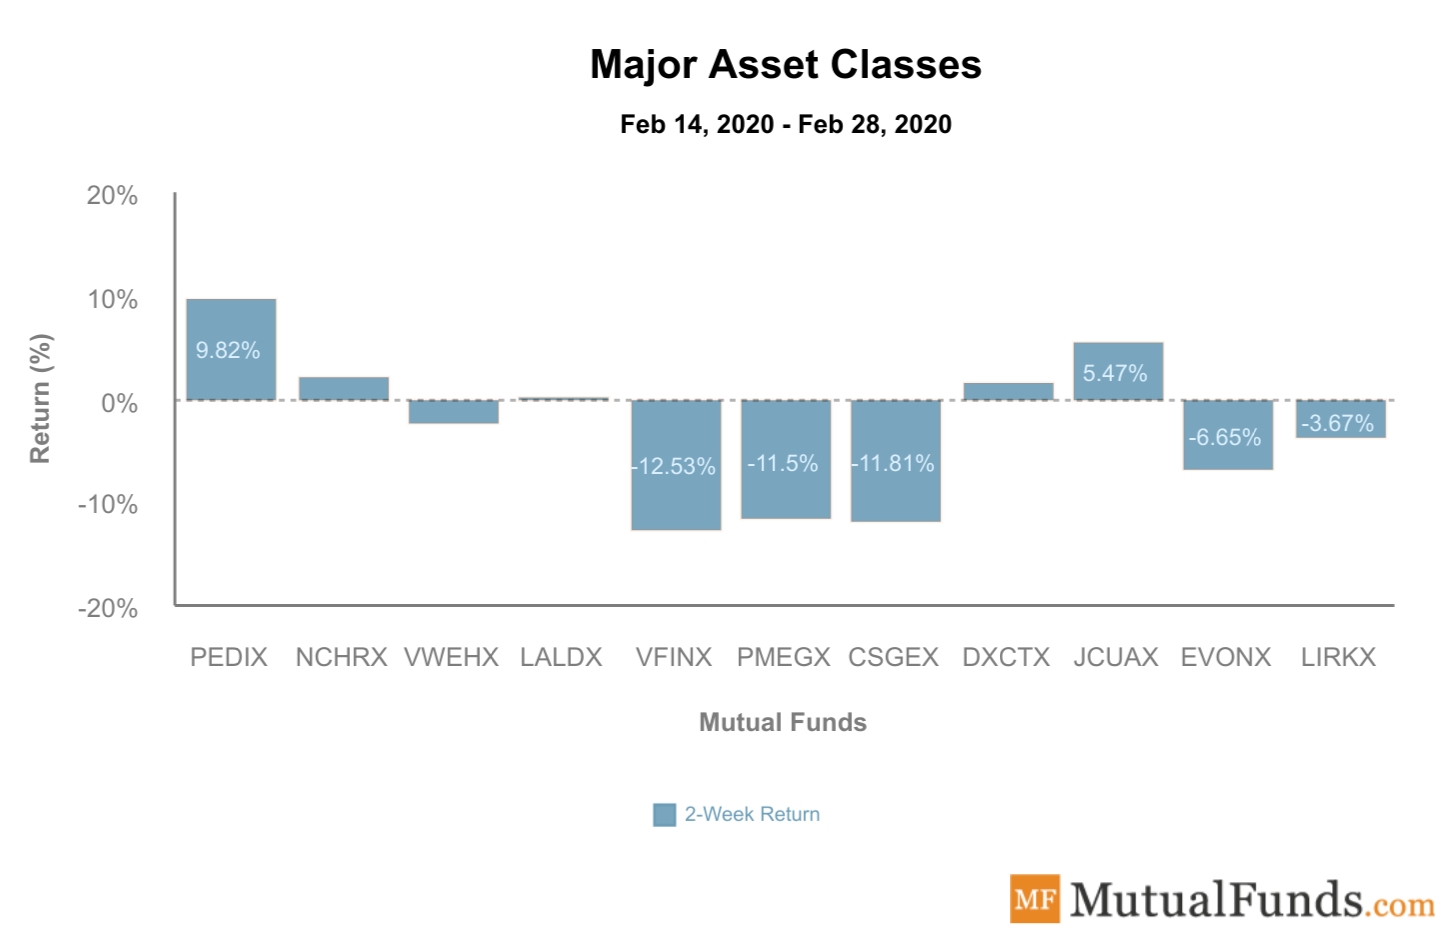 Major Asset Classes Performance March 3, 2020